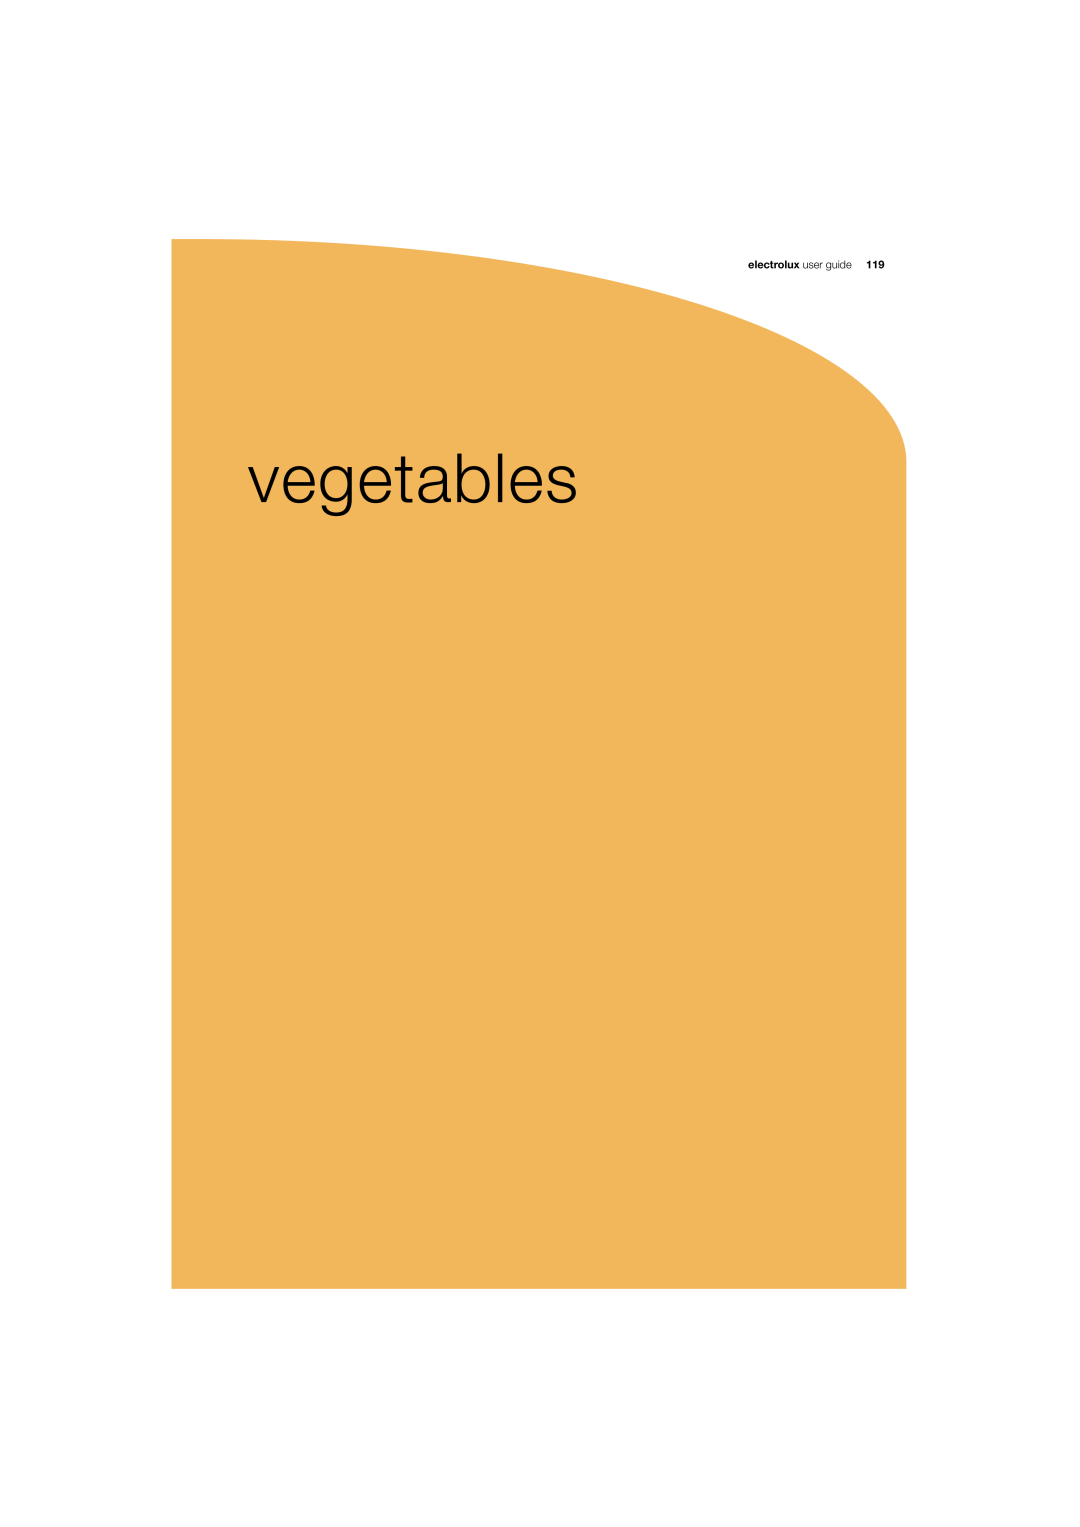 Electrolux 180 manual vegetables, electrolux user guide 